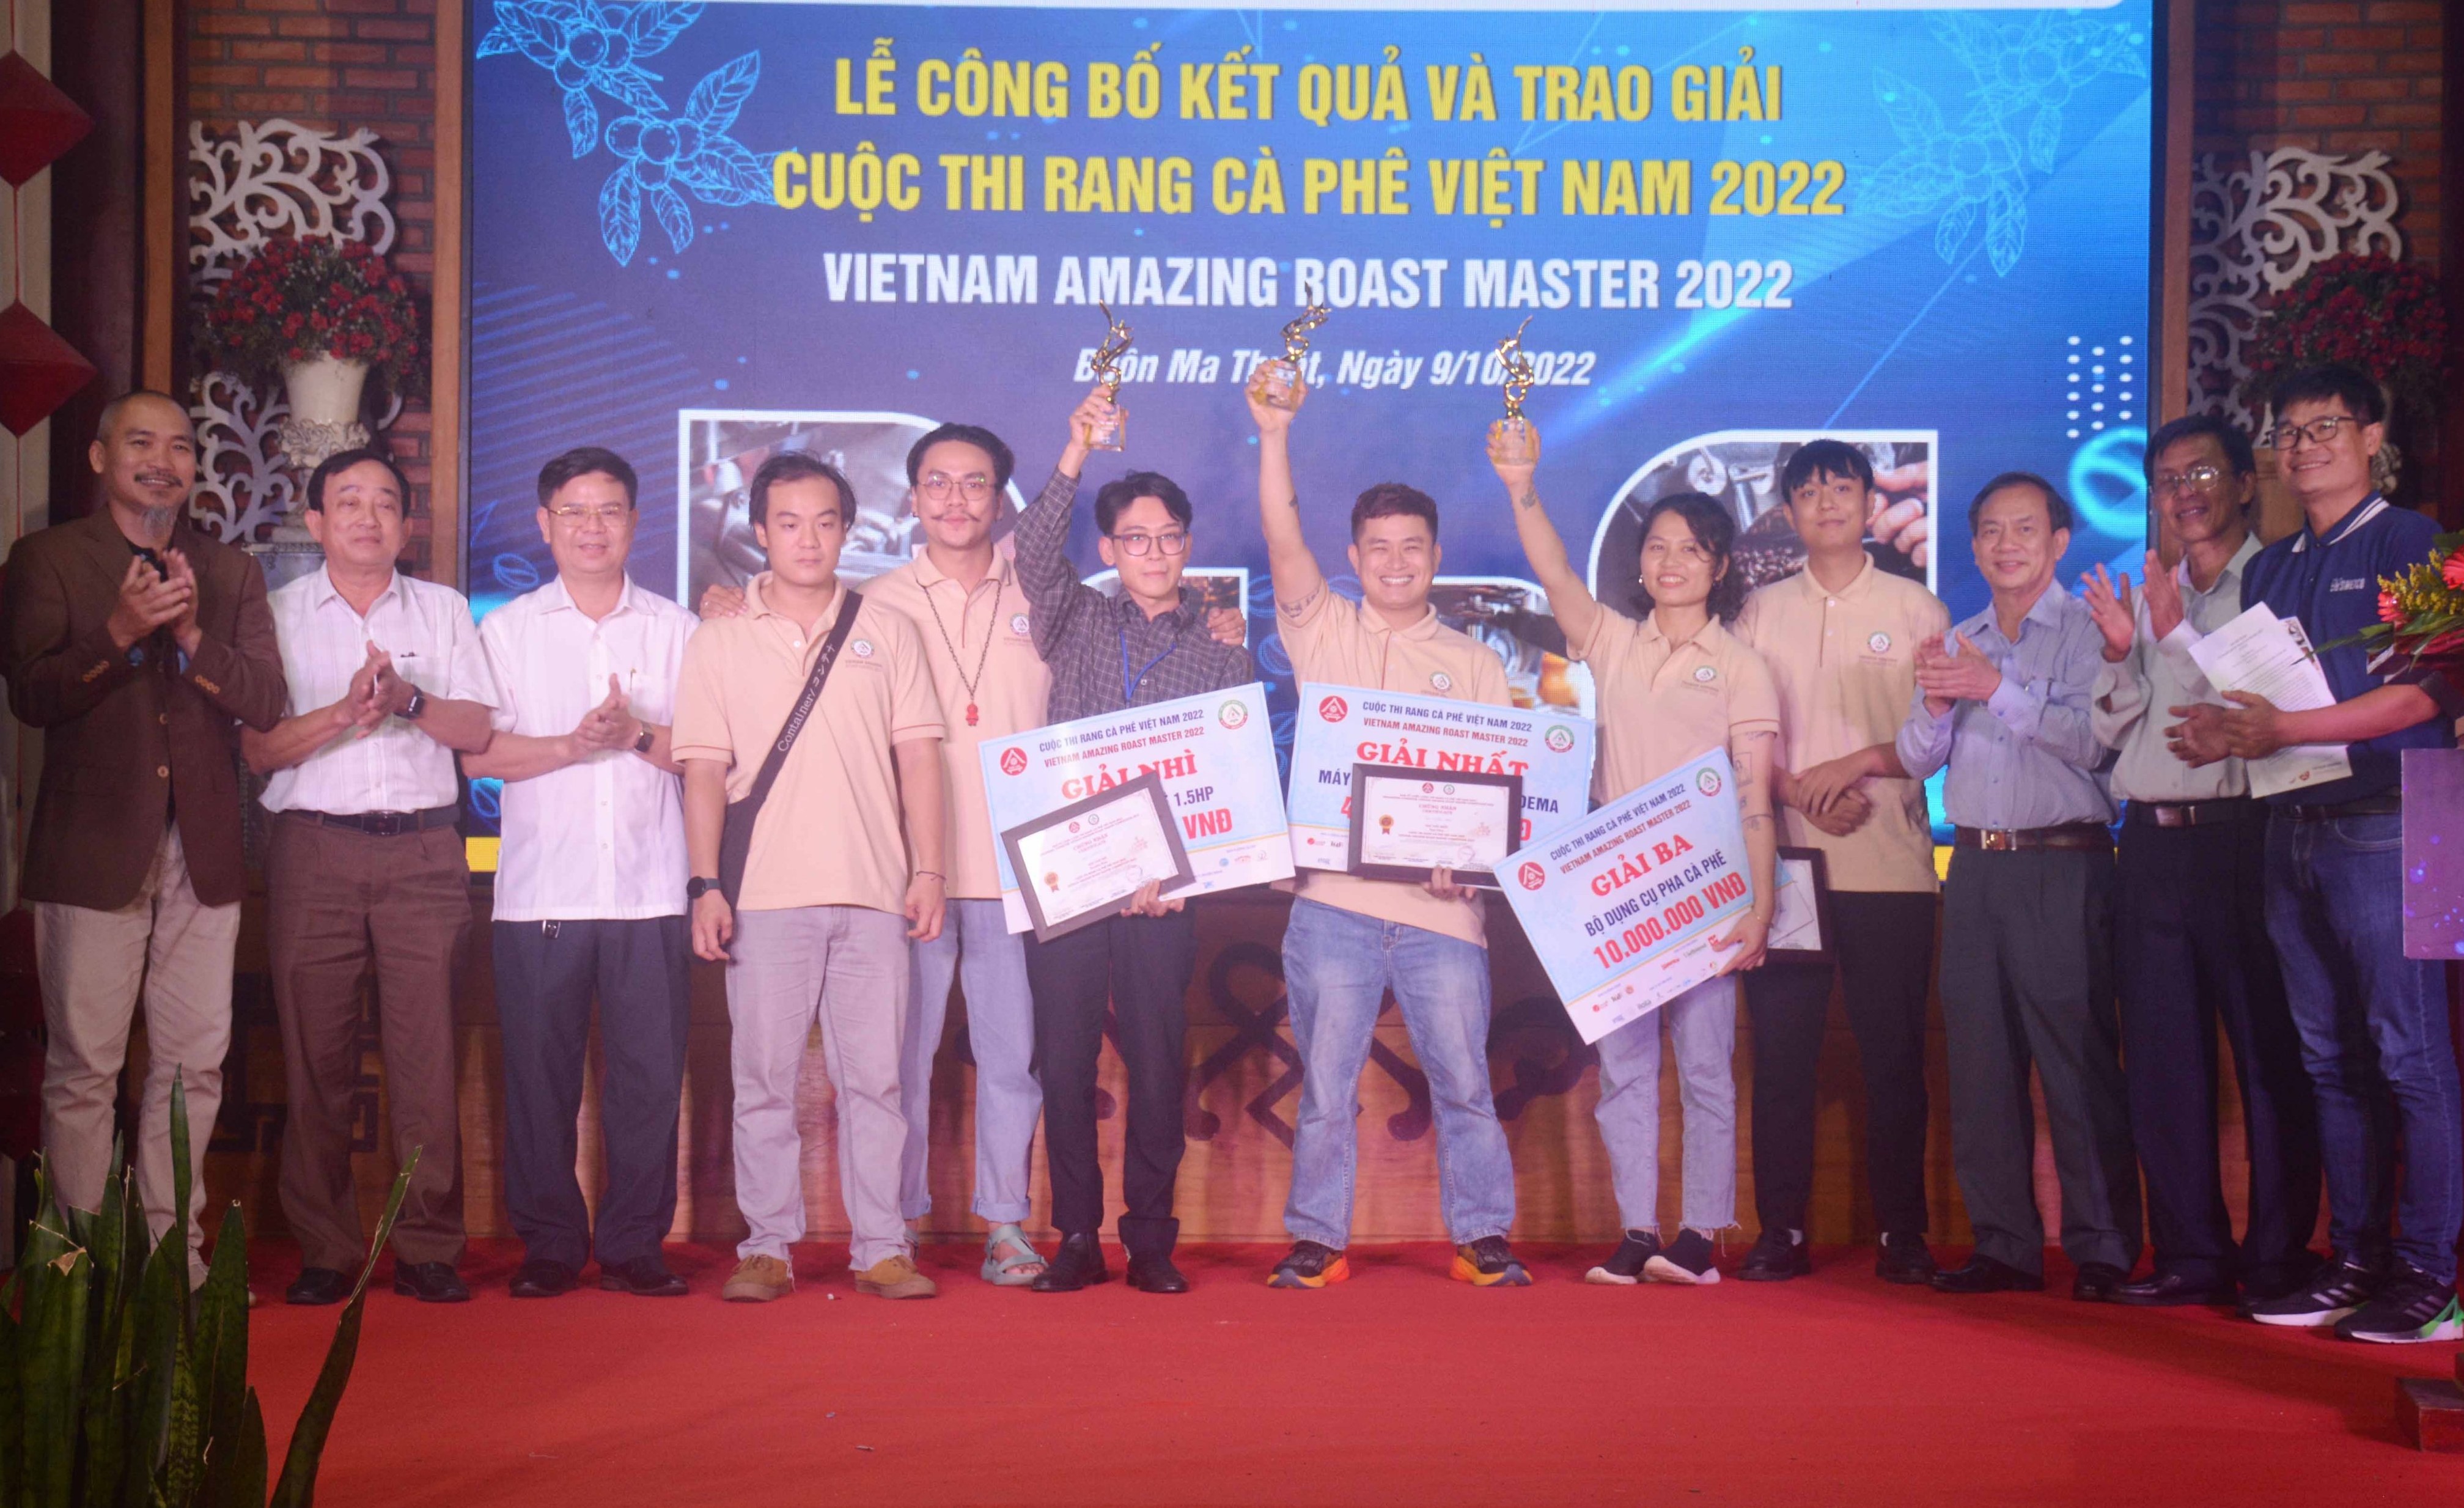 Closing and awarding ceremony of Vietnam Amazing Roast Master 2022